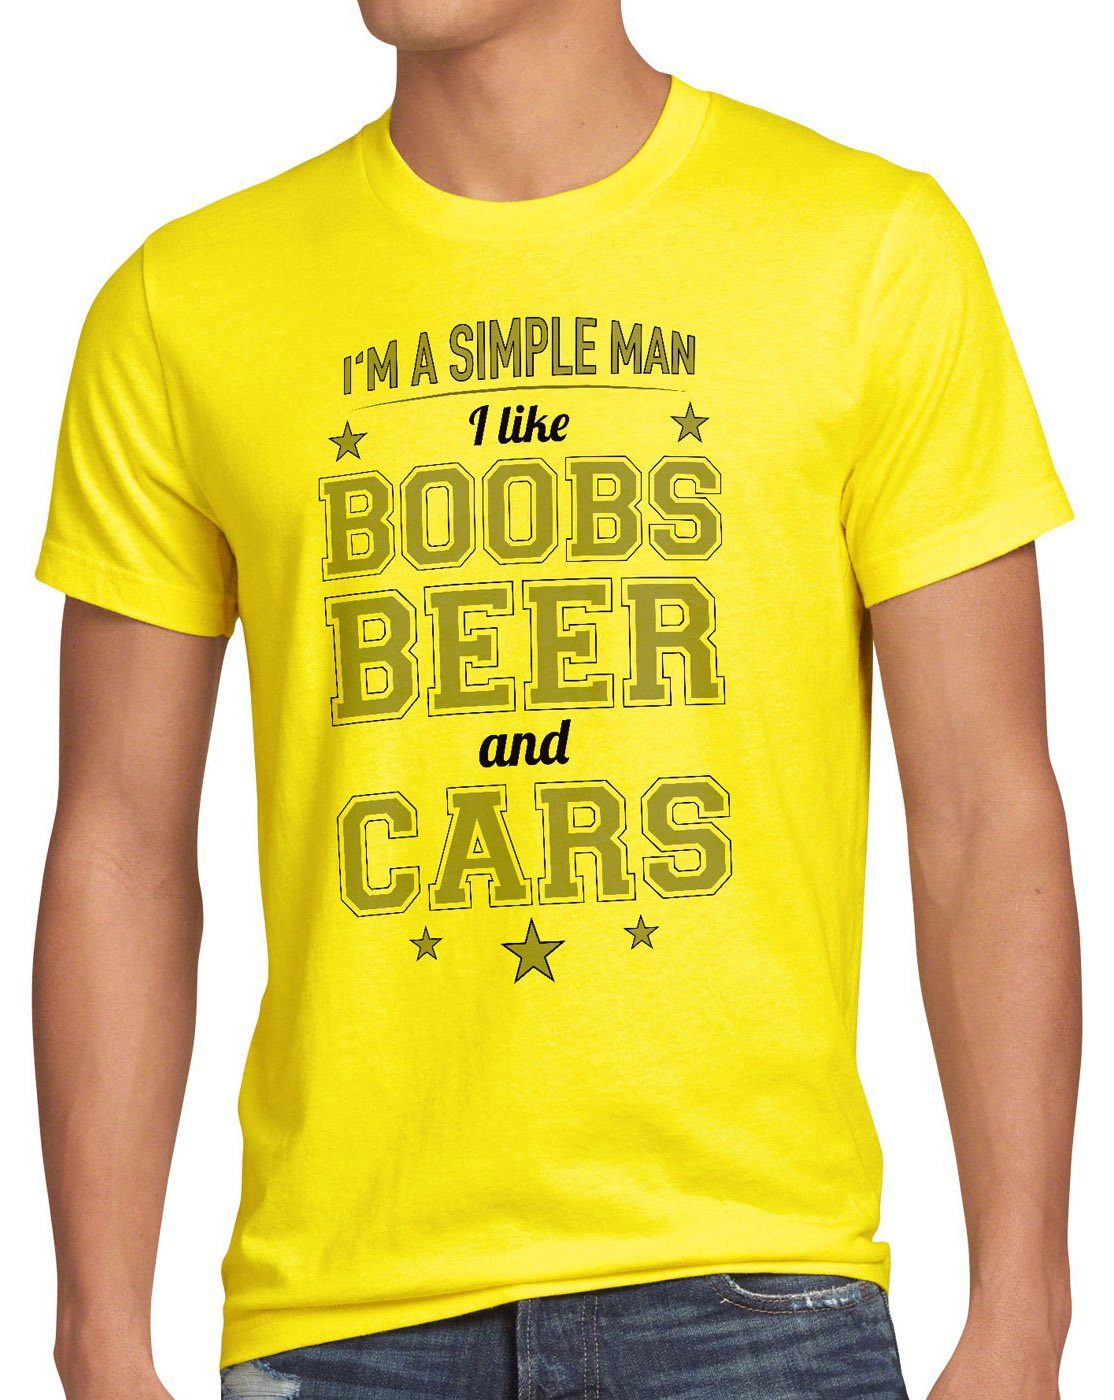 style3 Print-Shirt Herren T-Shirt Simple Man boobs beer car auto bier titten funshirt tuning spruch gelb